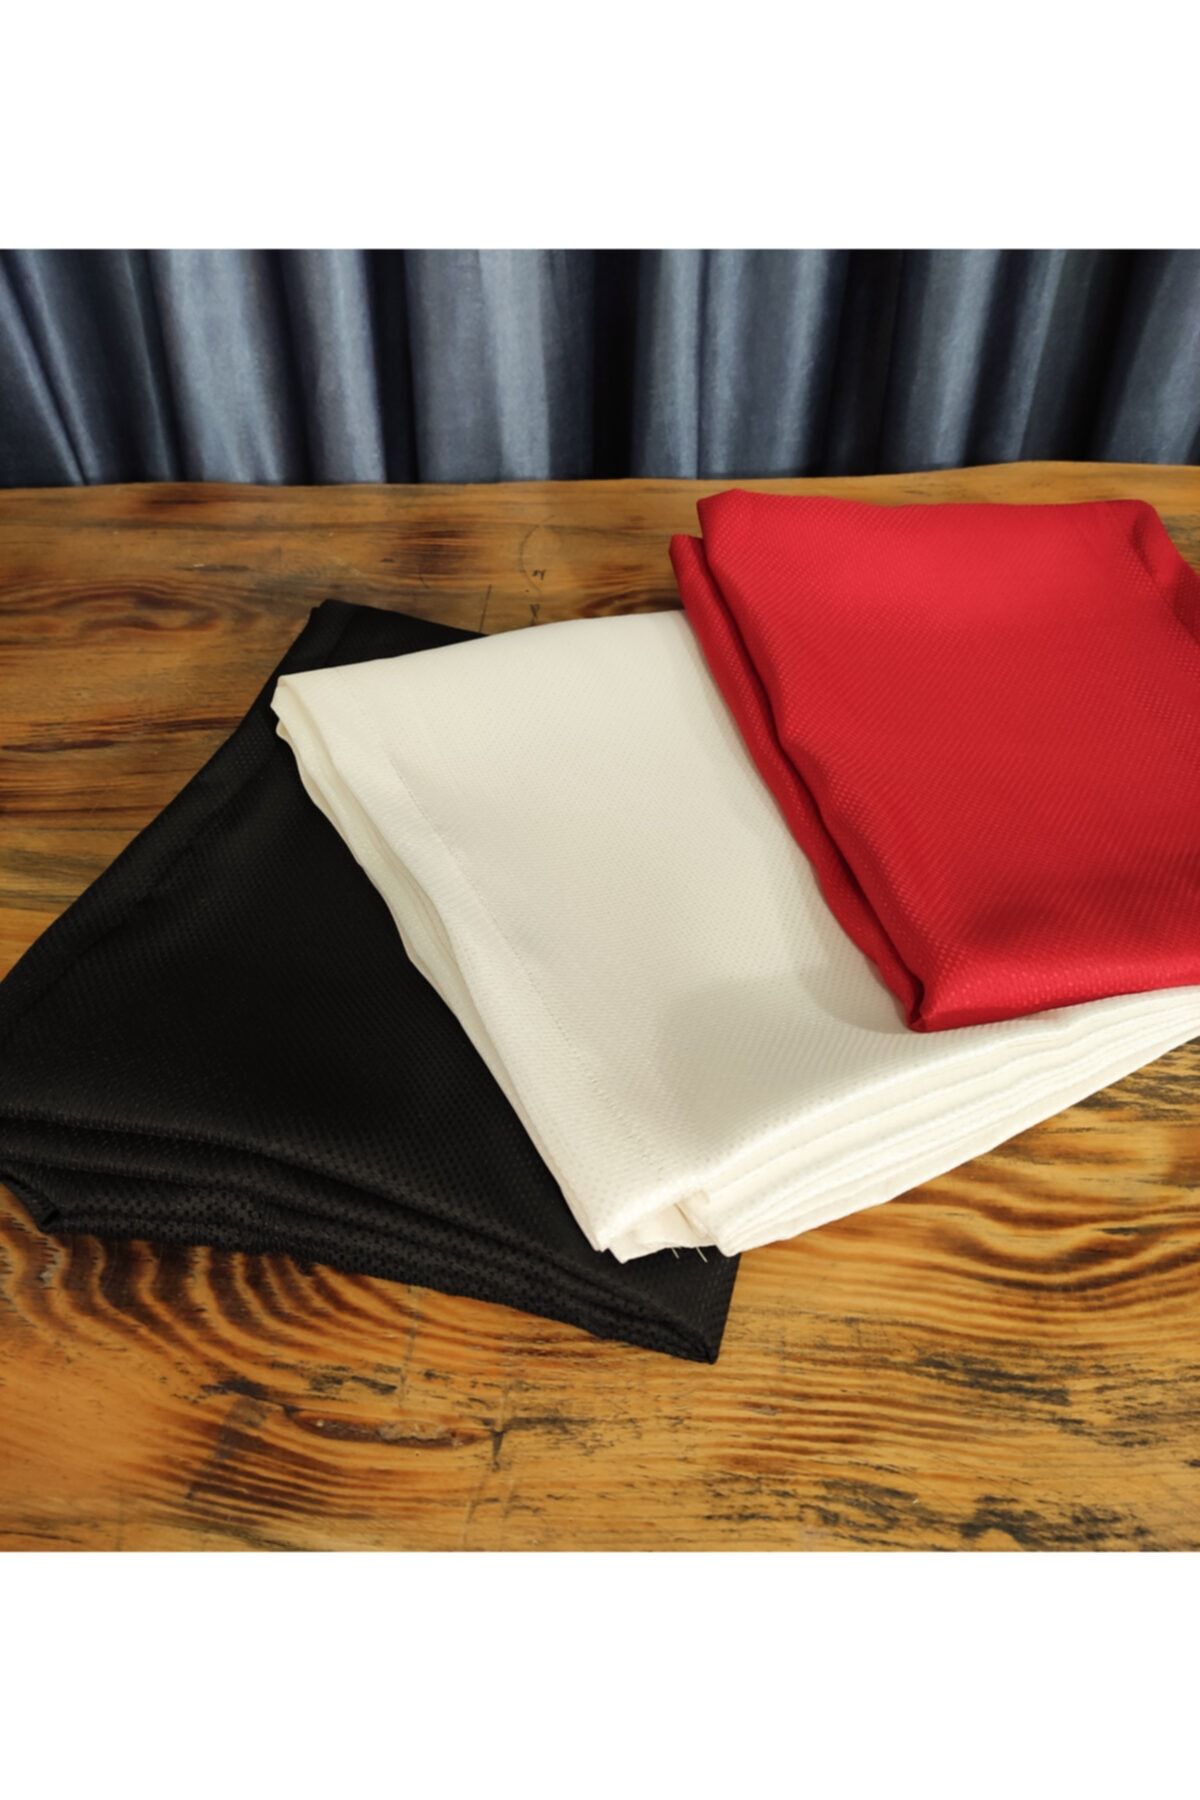 Çt Çeyizci Tekstil Masa Örtüsü Leke Tutmaz Kumaş Tek 160x220 cm Siyah